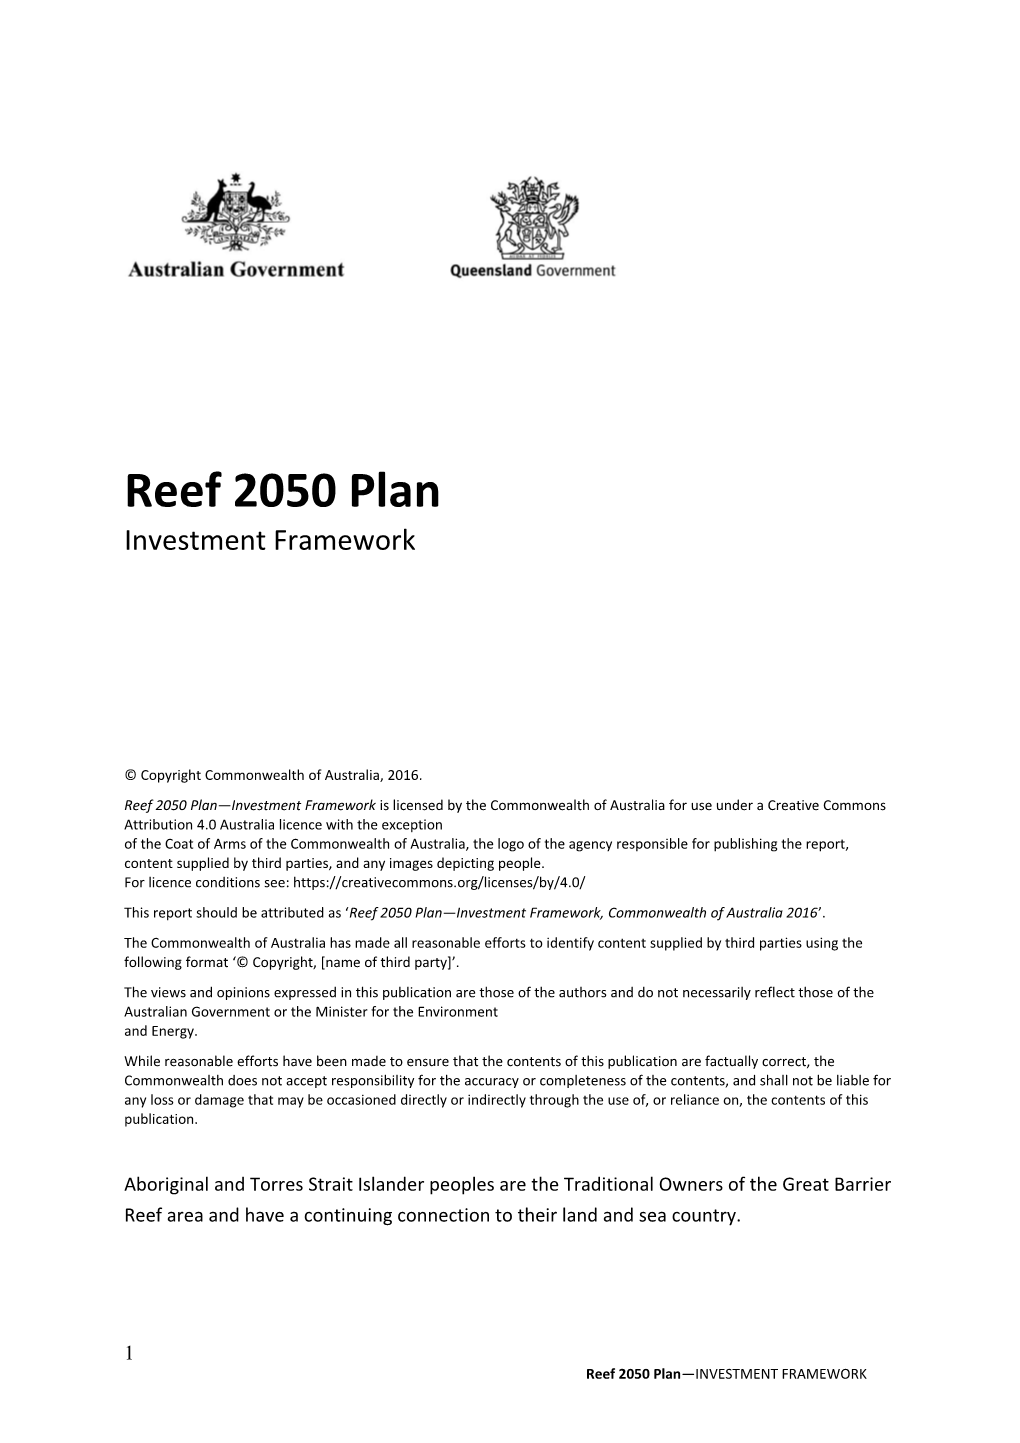 Reef 2050 Plan Investment Framework